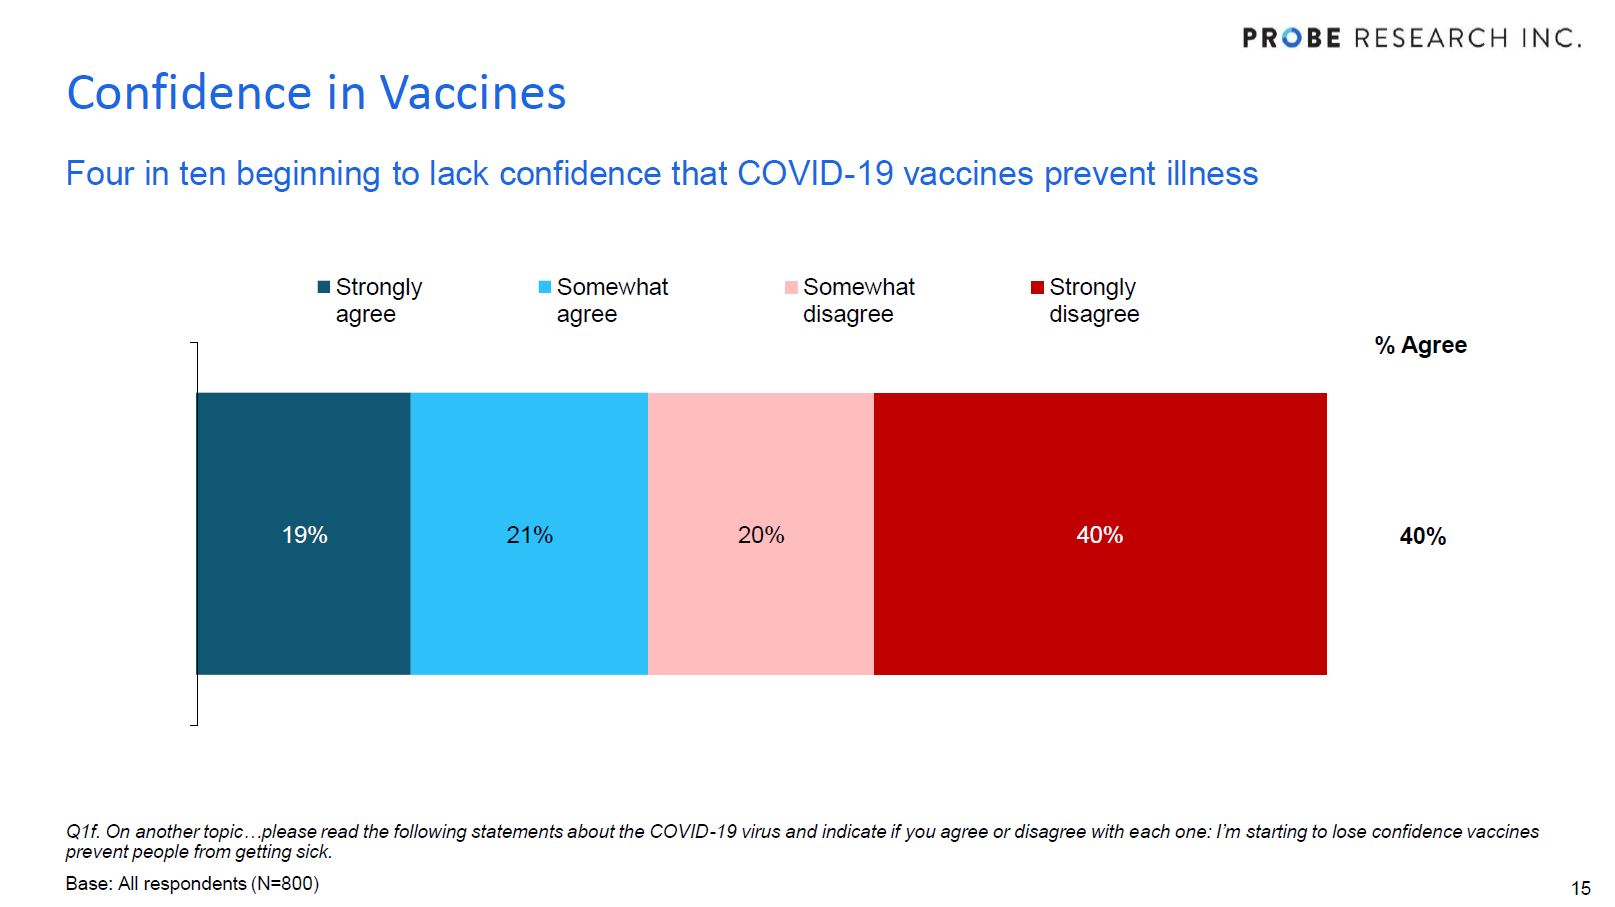 Manitobans' confidence in vaccines